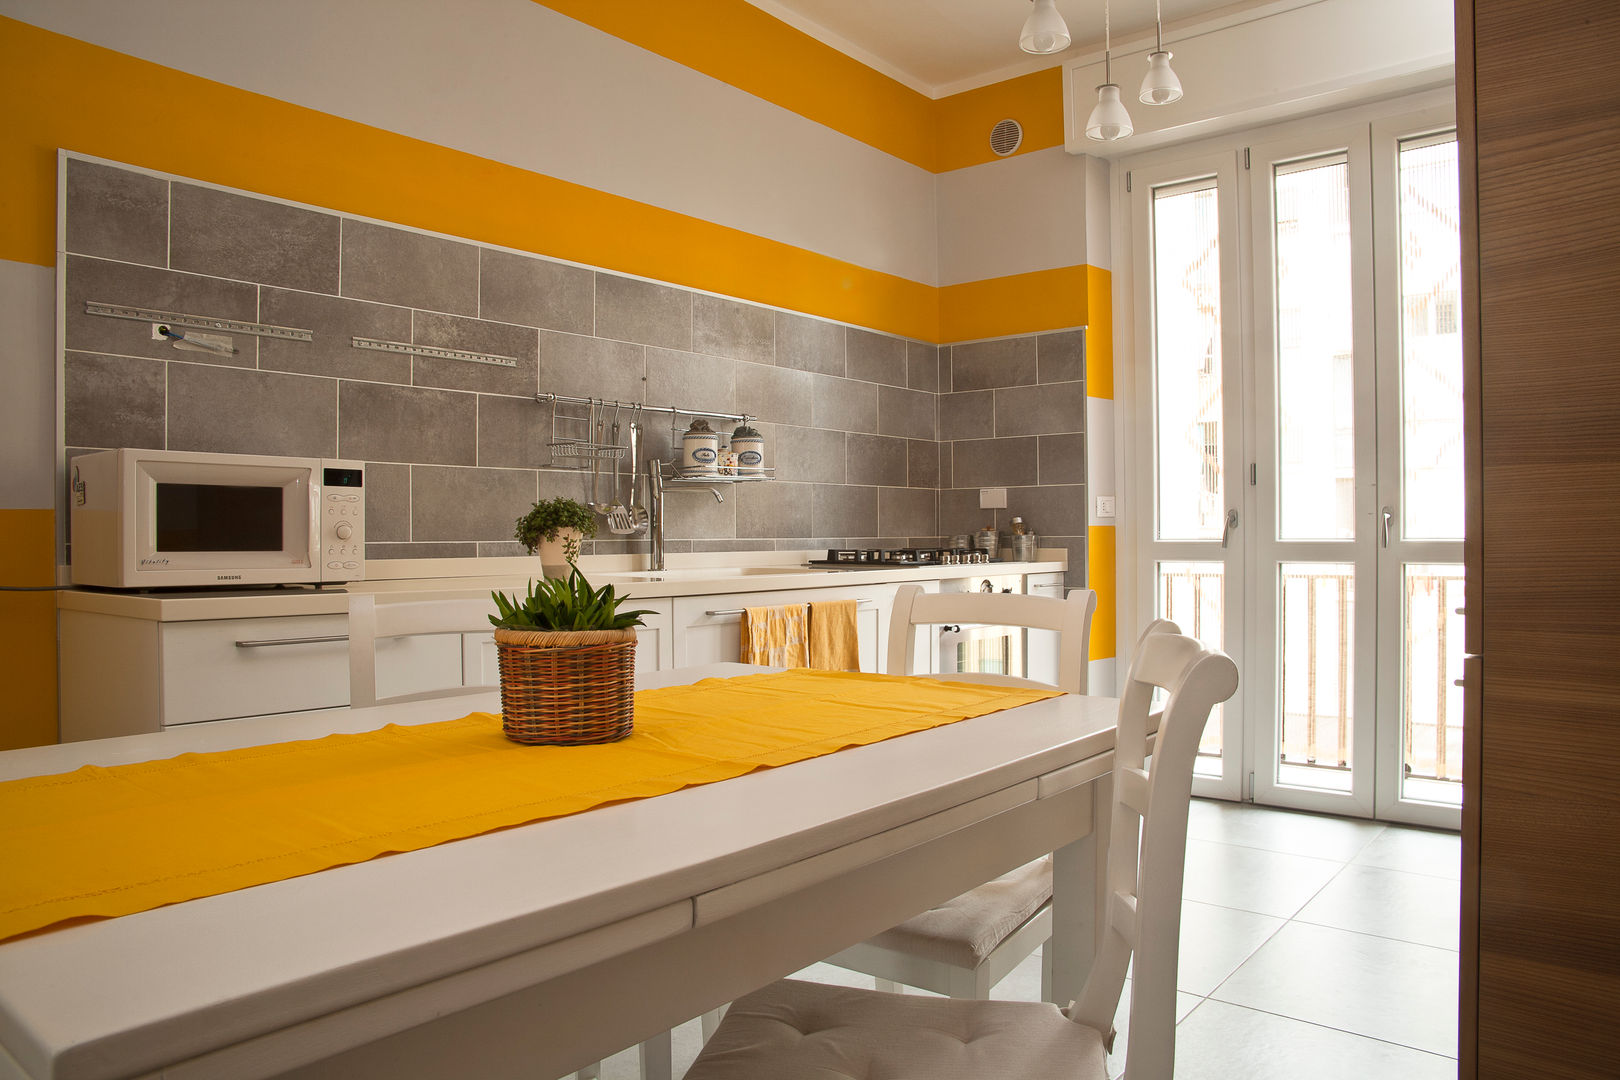 _Mondrian Home_, Alessandro Multari Ingegnere - I AM puro ingegno italiano Alessandro Multari Ingegnere - I AM puro ingegno italiano Eclectic style dining room